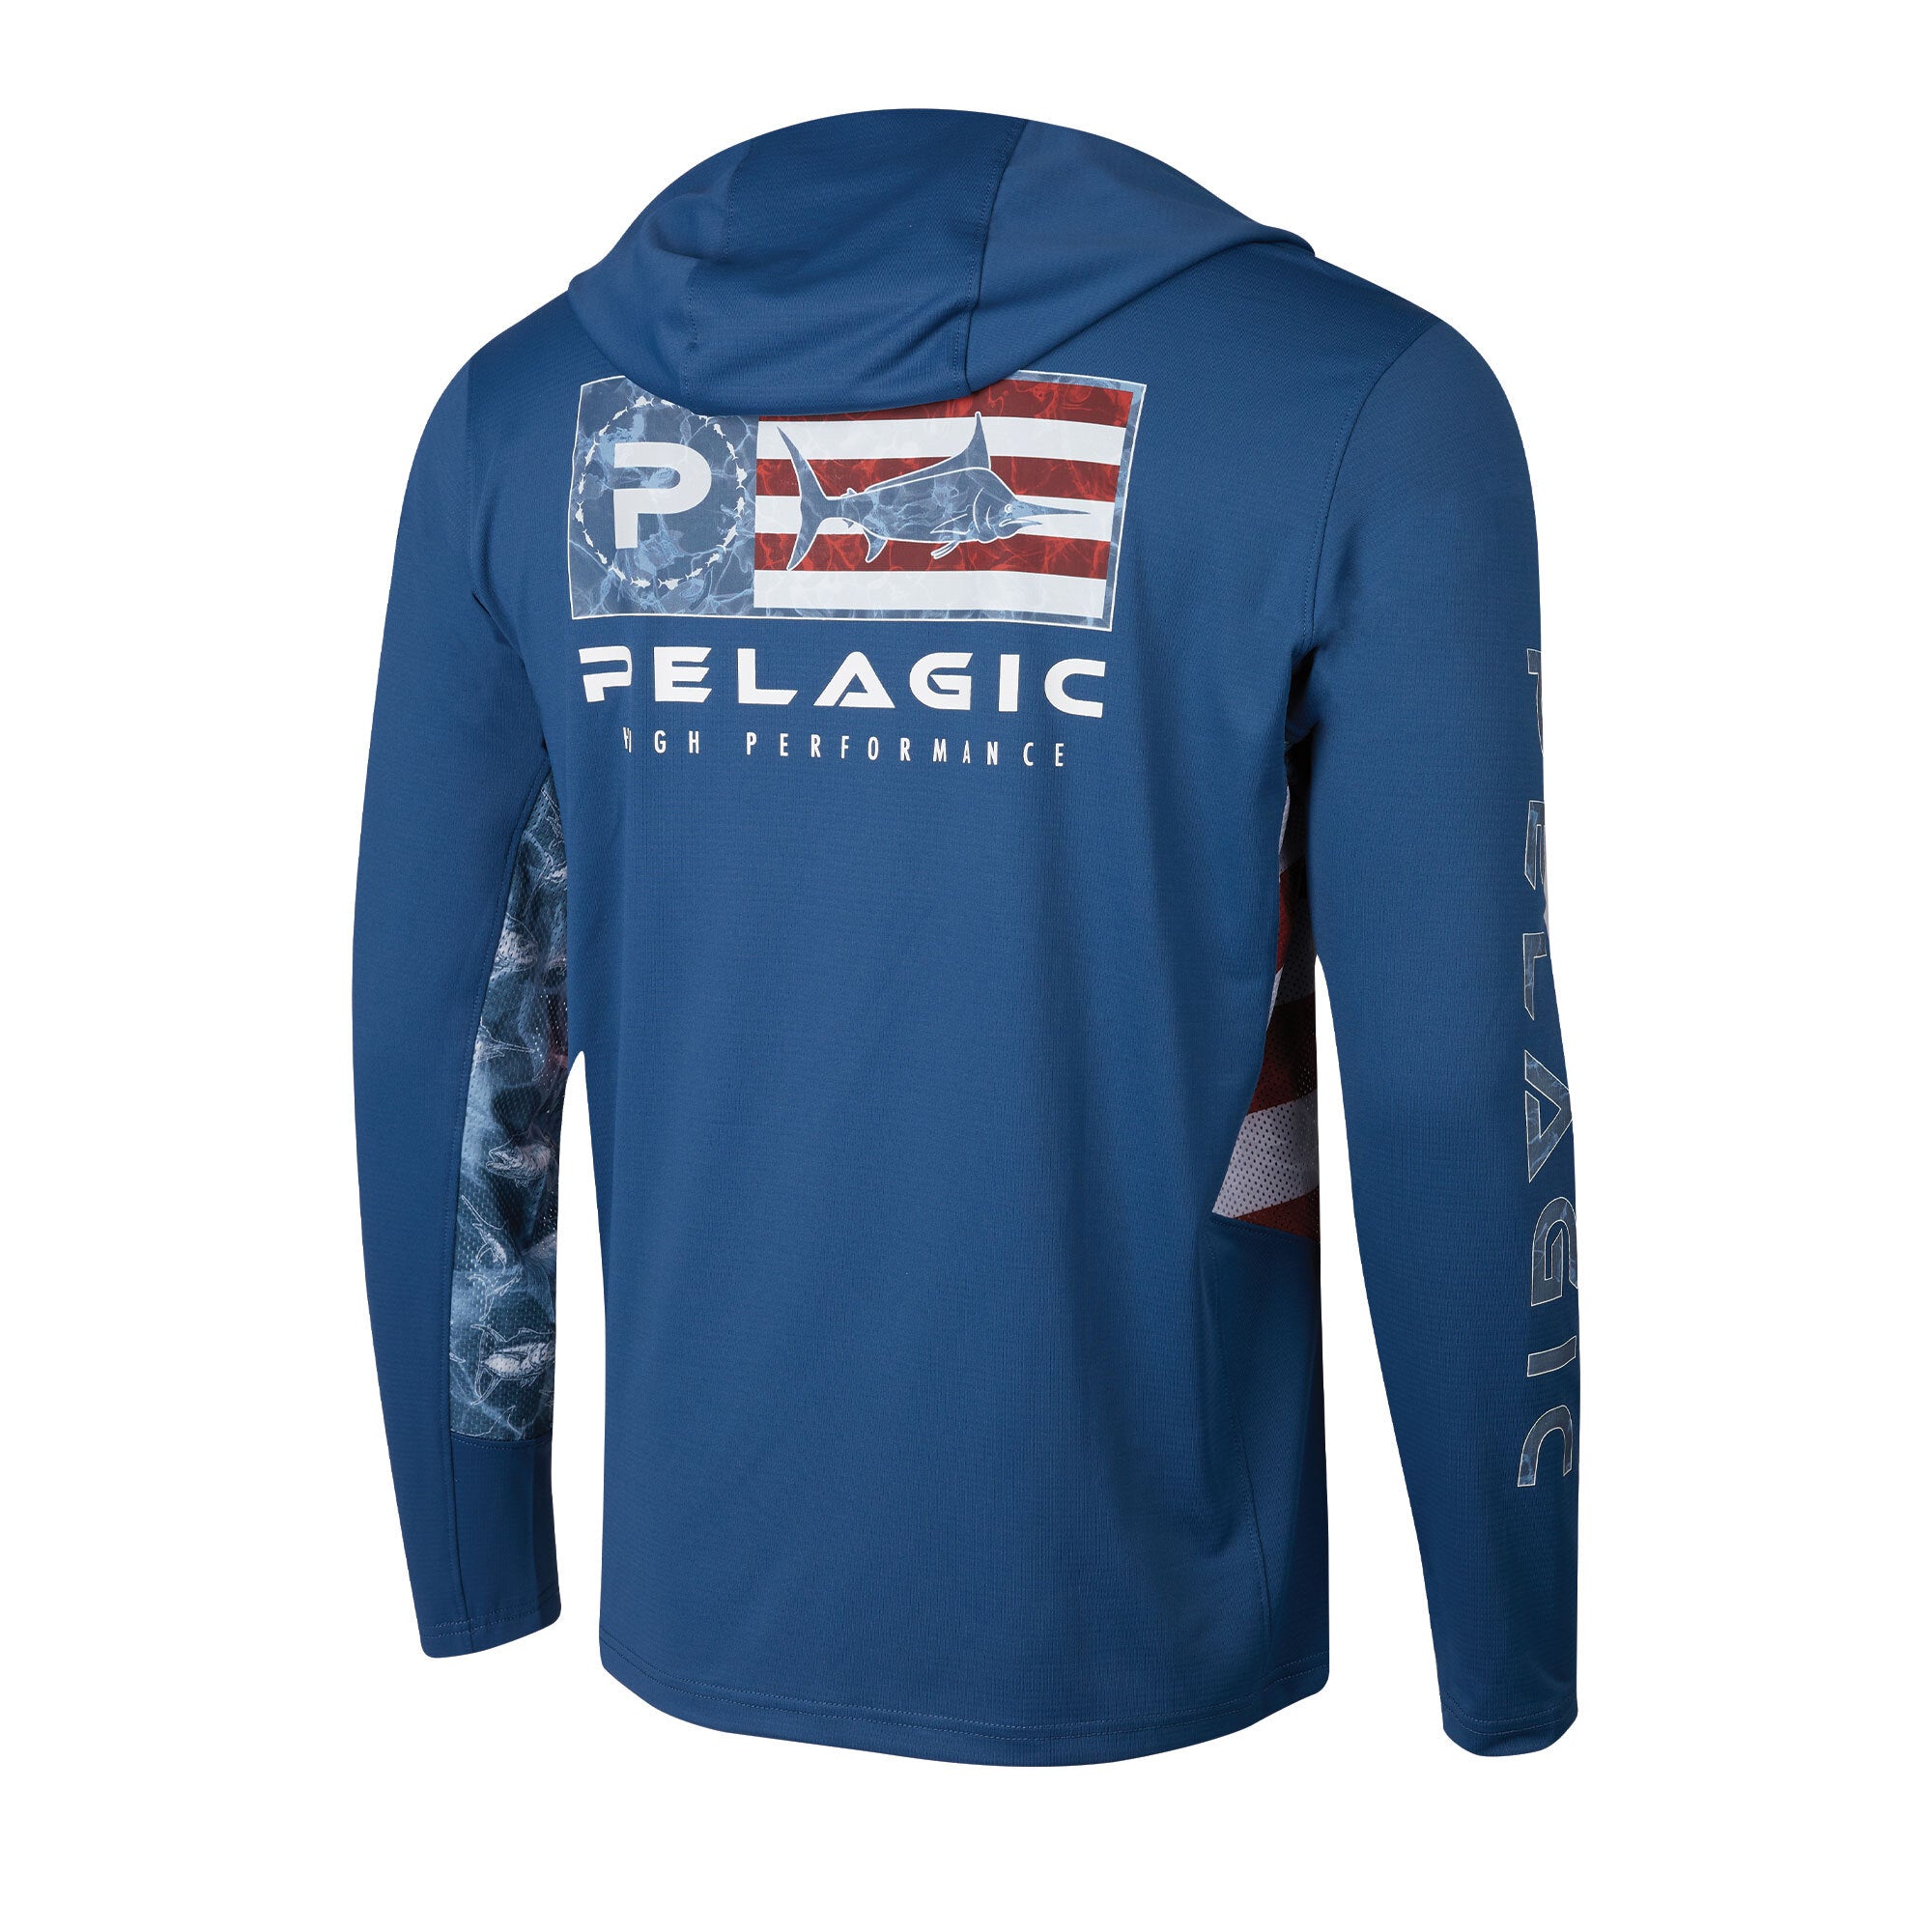 Pelagic Exo-Tech 2.0 Light Grey Hooded Fishing Long-Sleeve Shirt for Men -  Light Grey - L